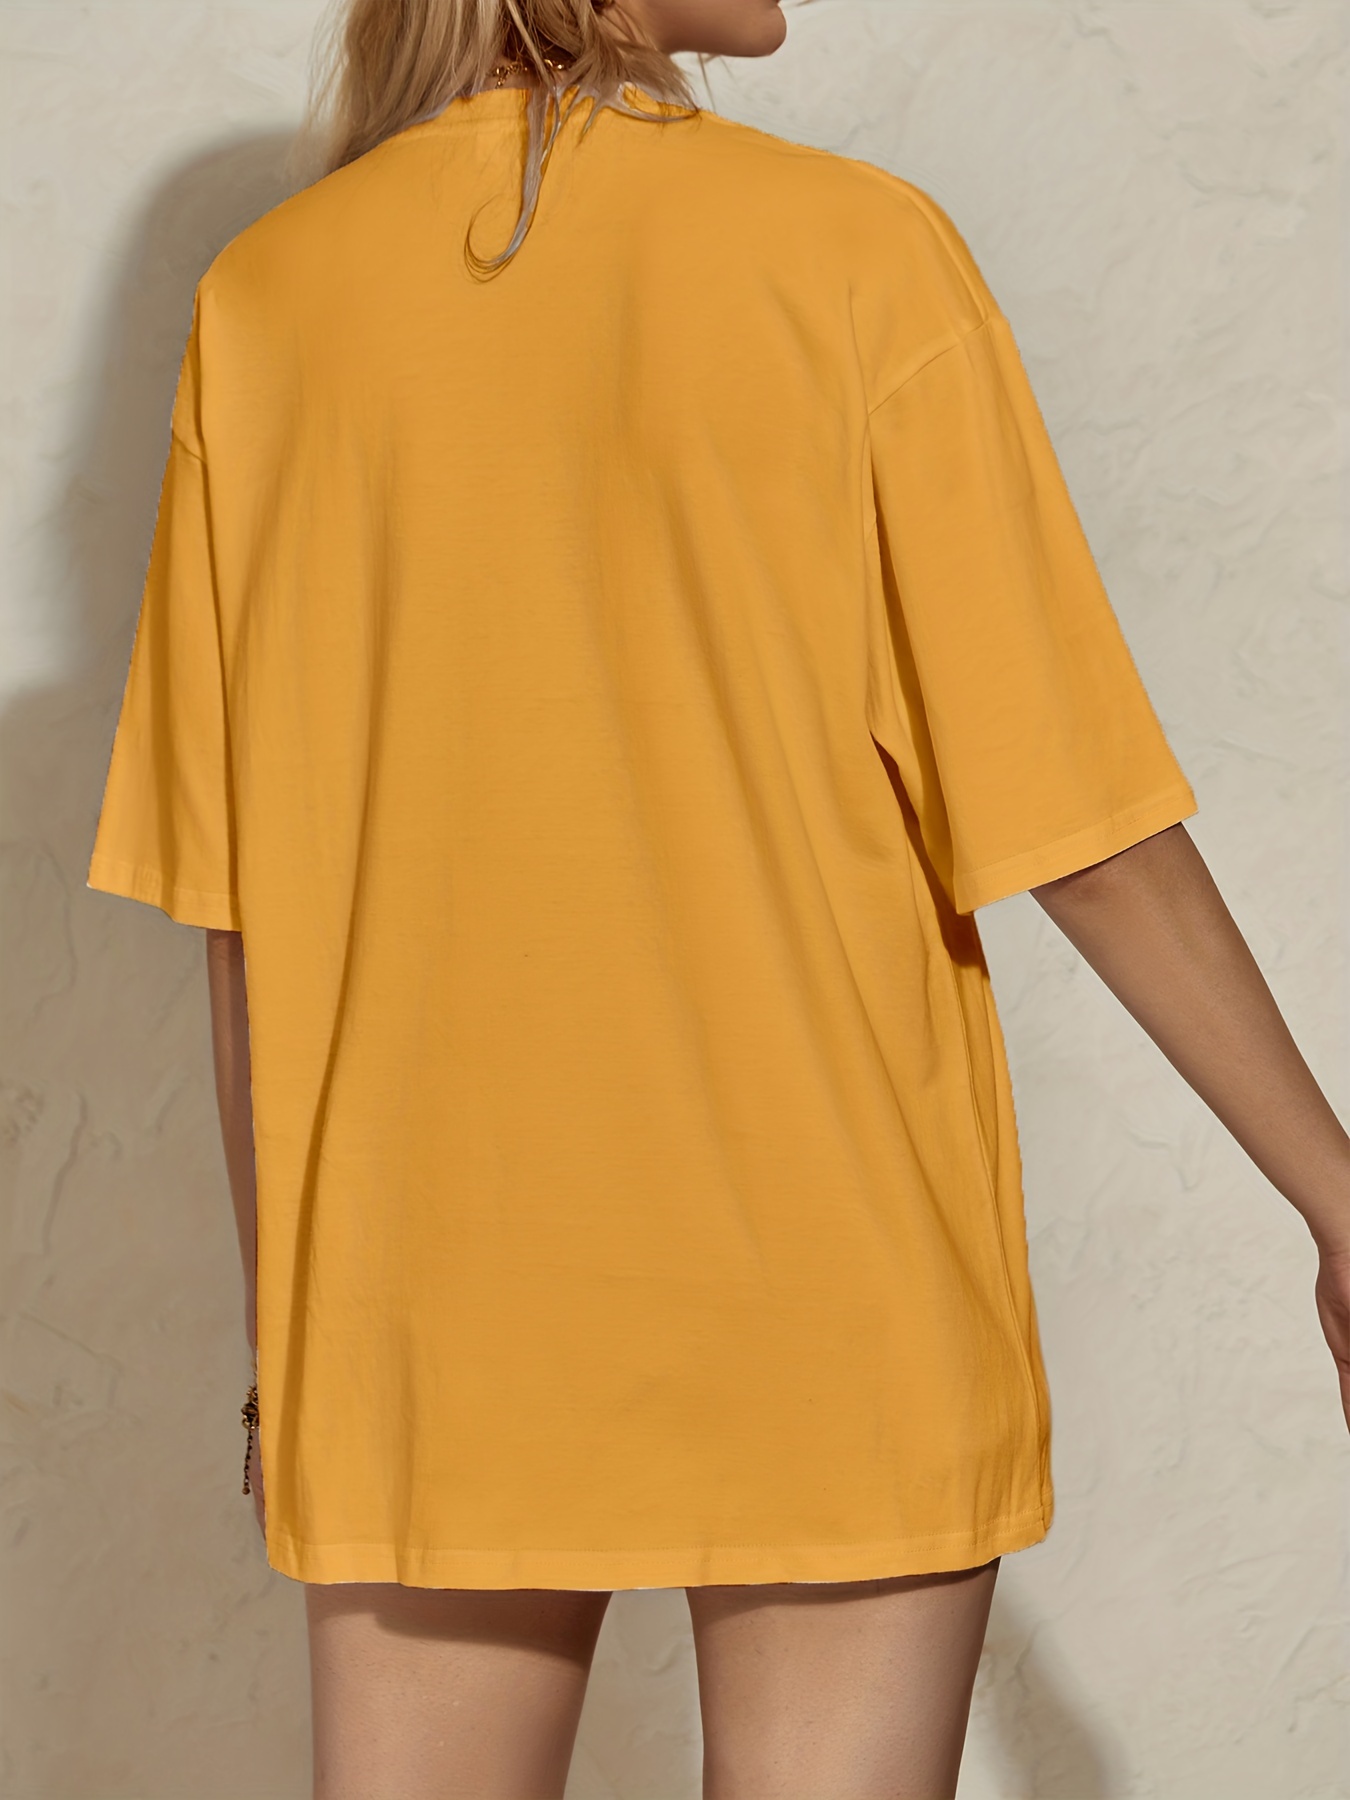 Womens Yellow Tops & T-Shirts.